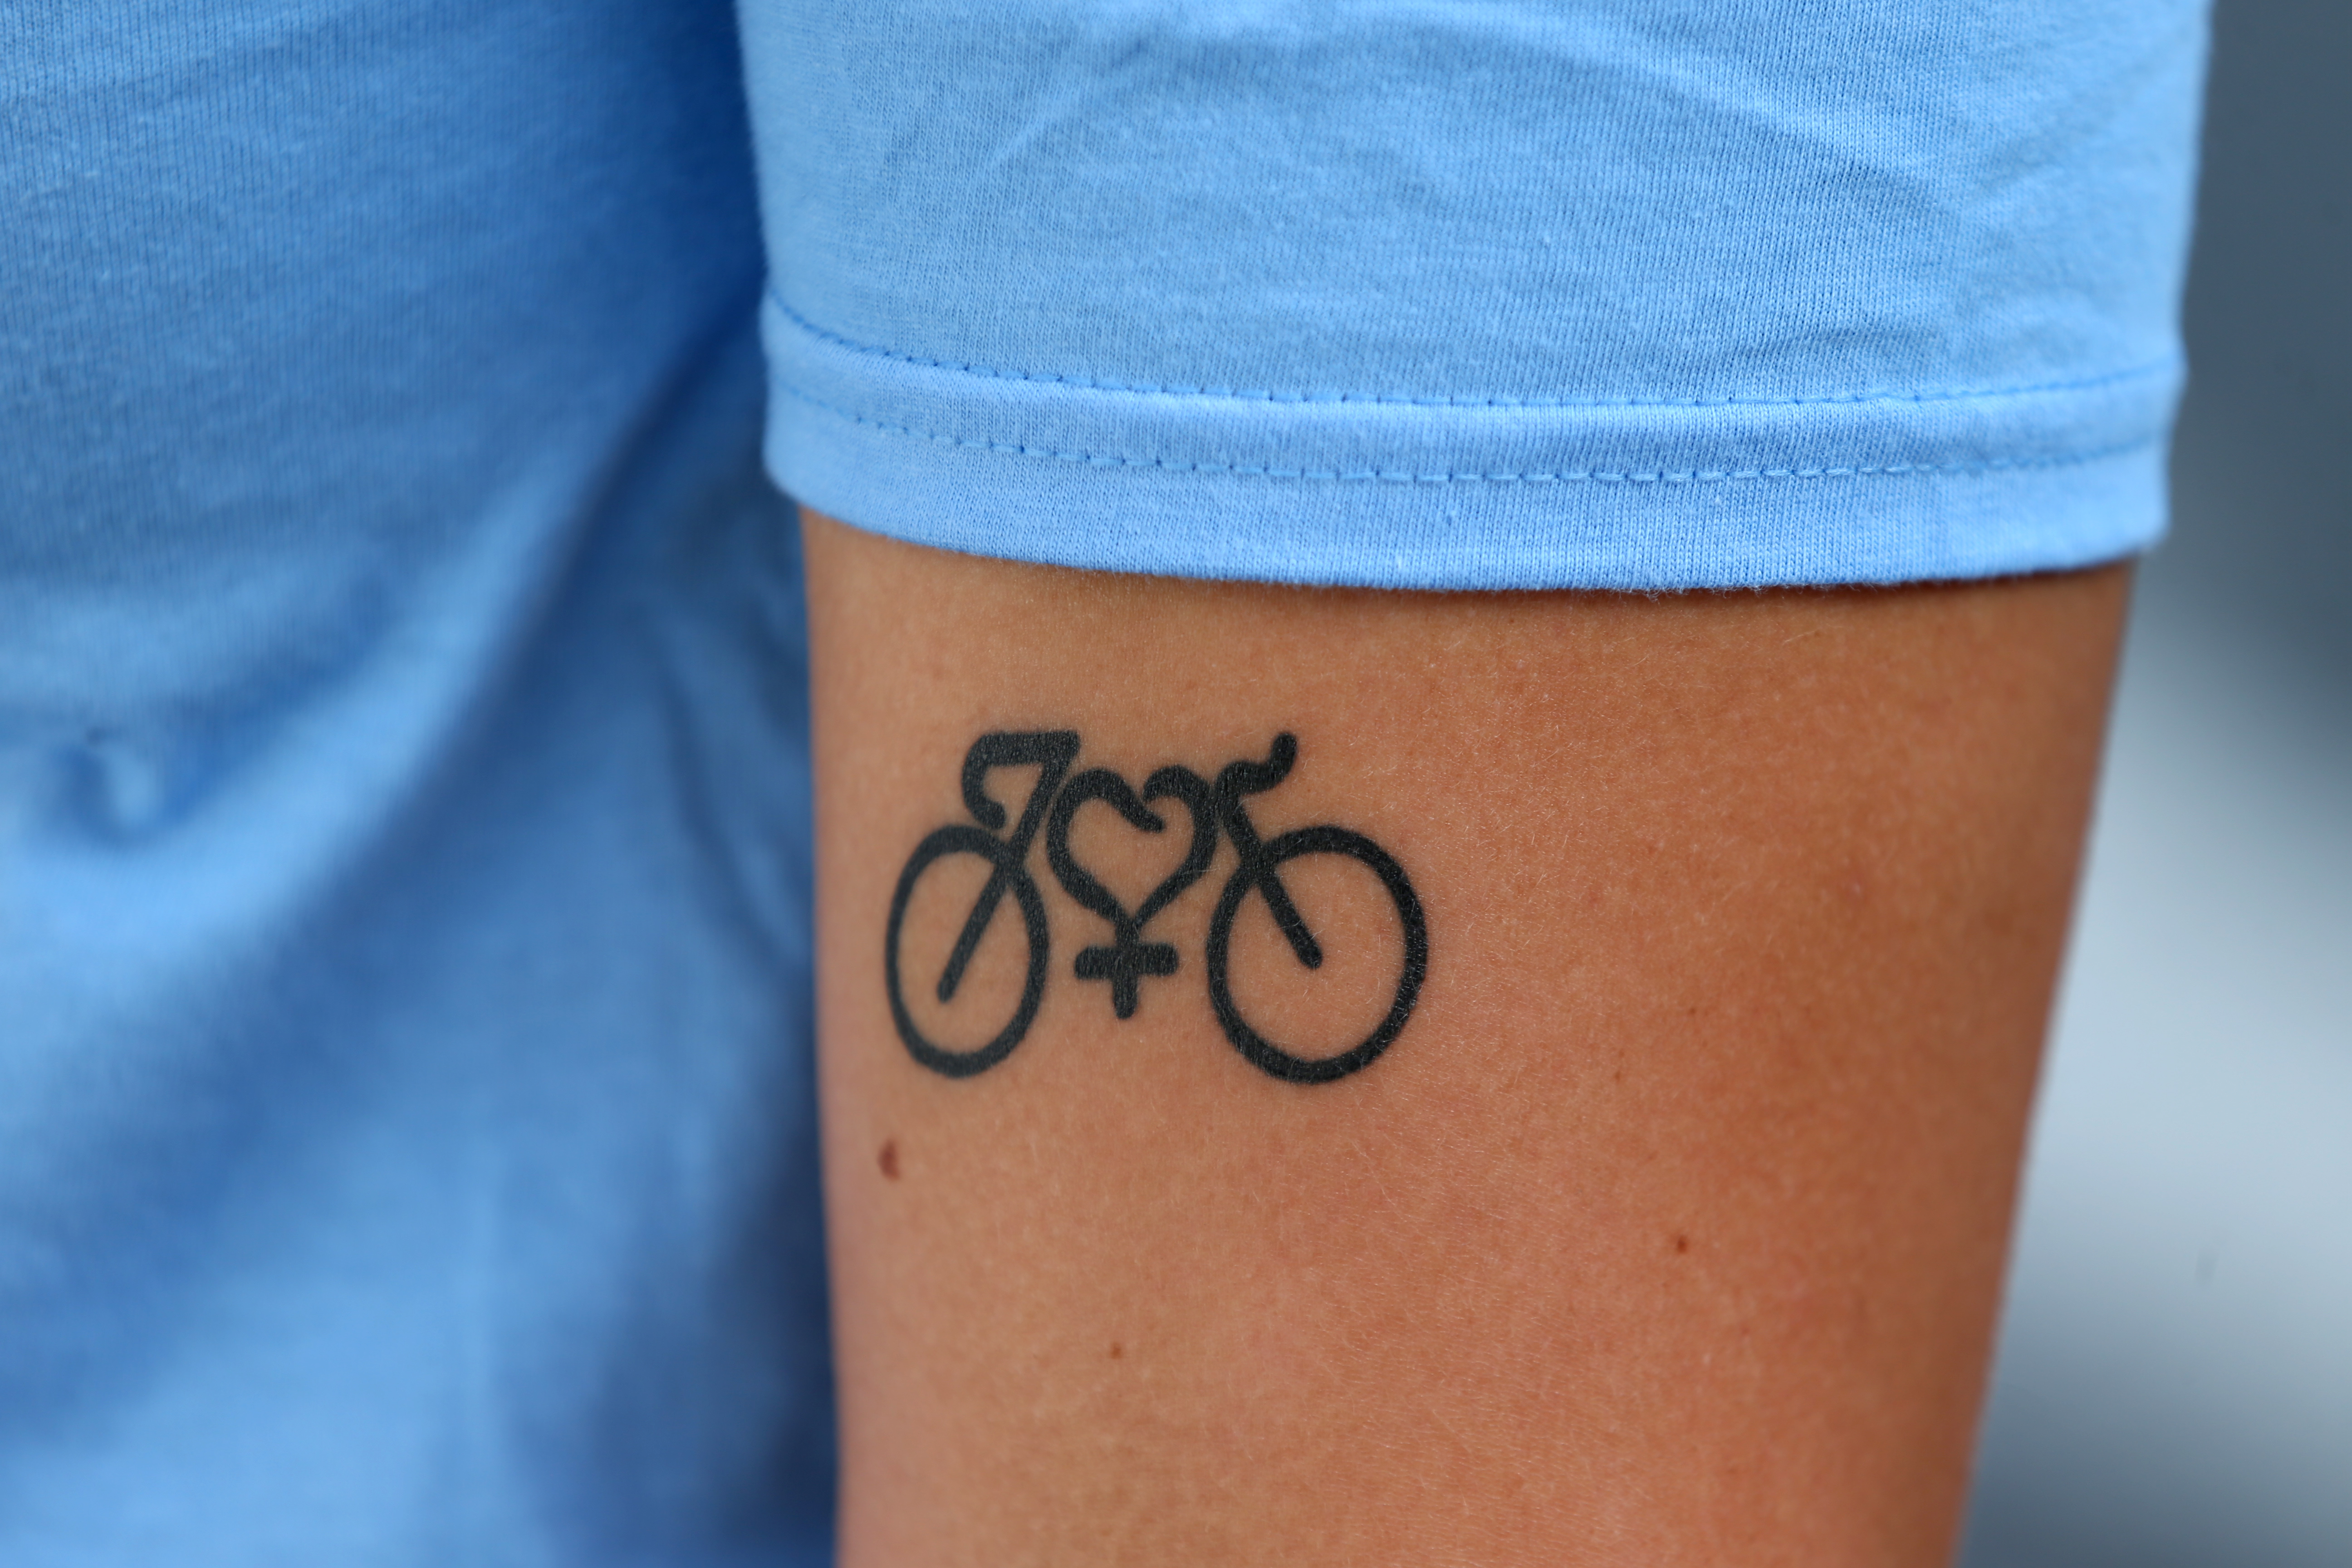 My tiny bicycle tattoo | Bicycle tattoo, Bike tattoos, Small tattoos